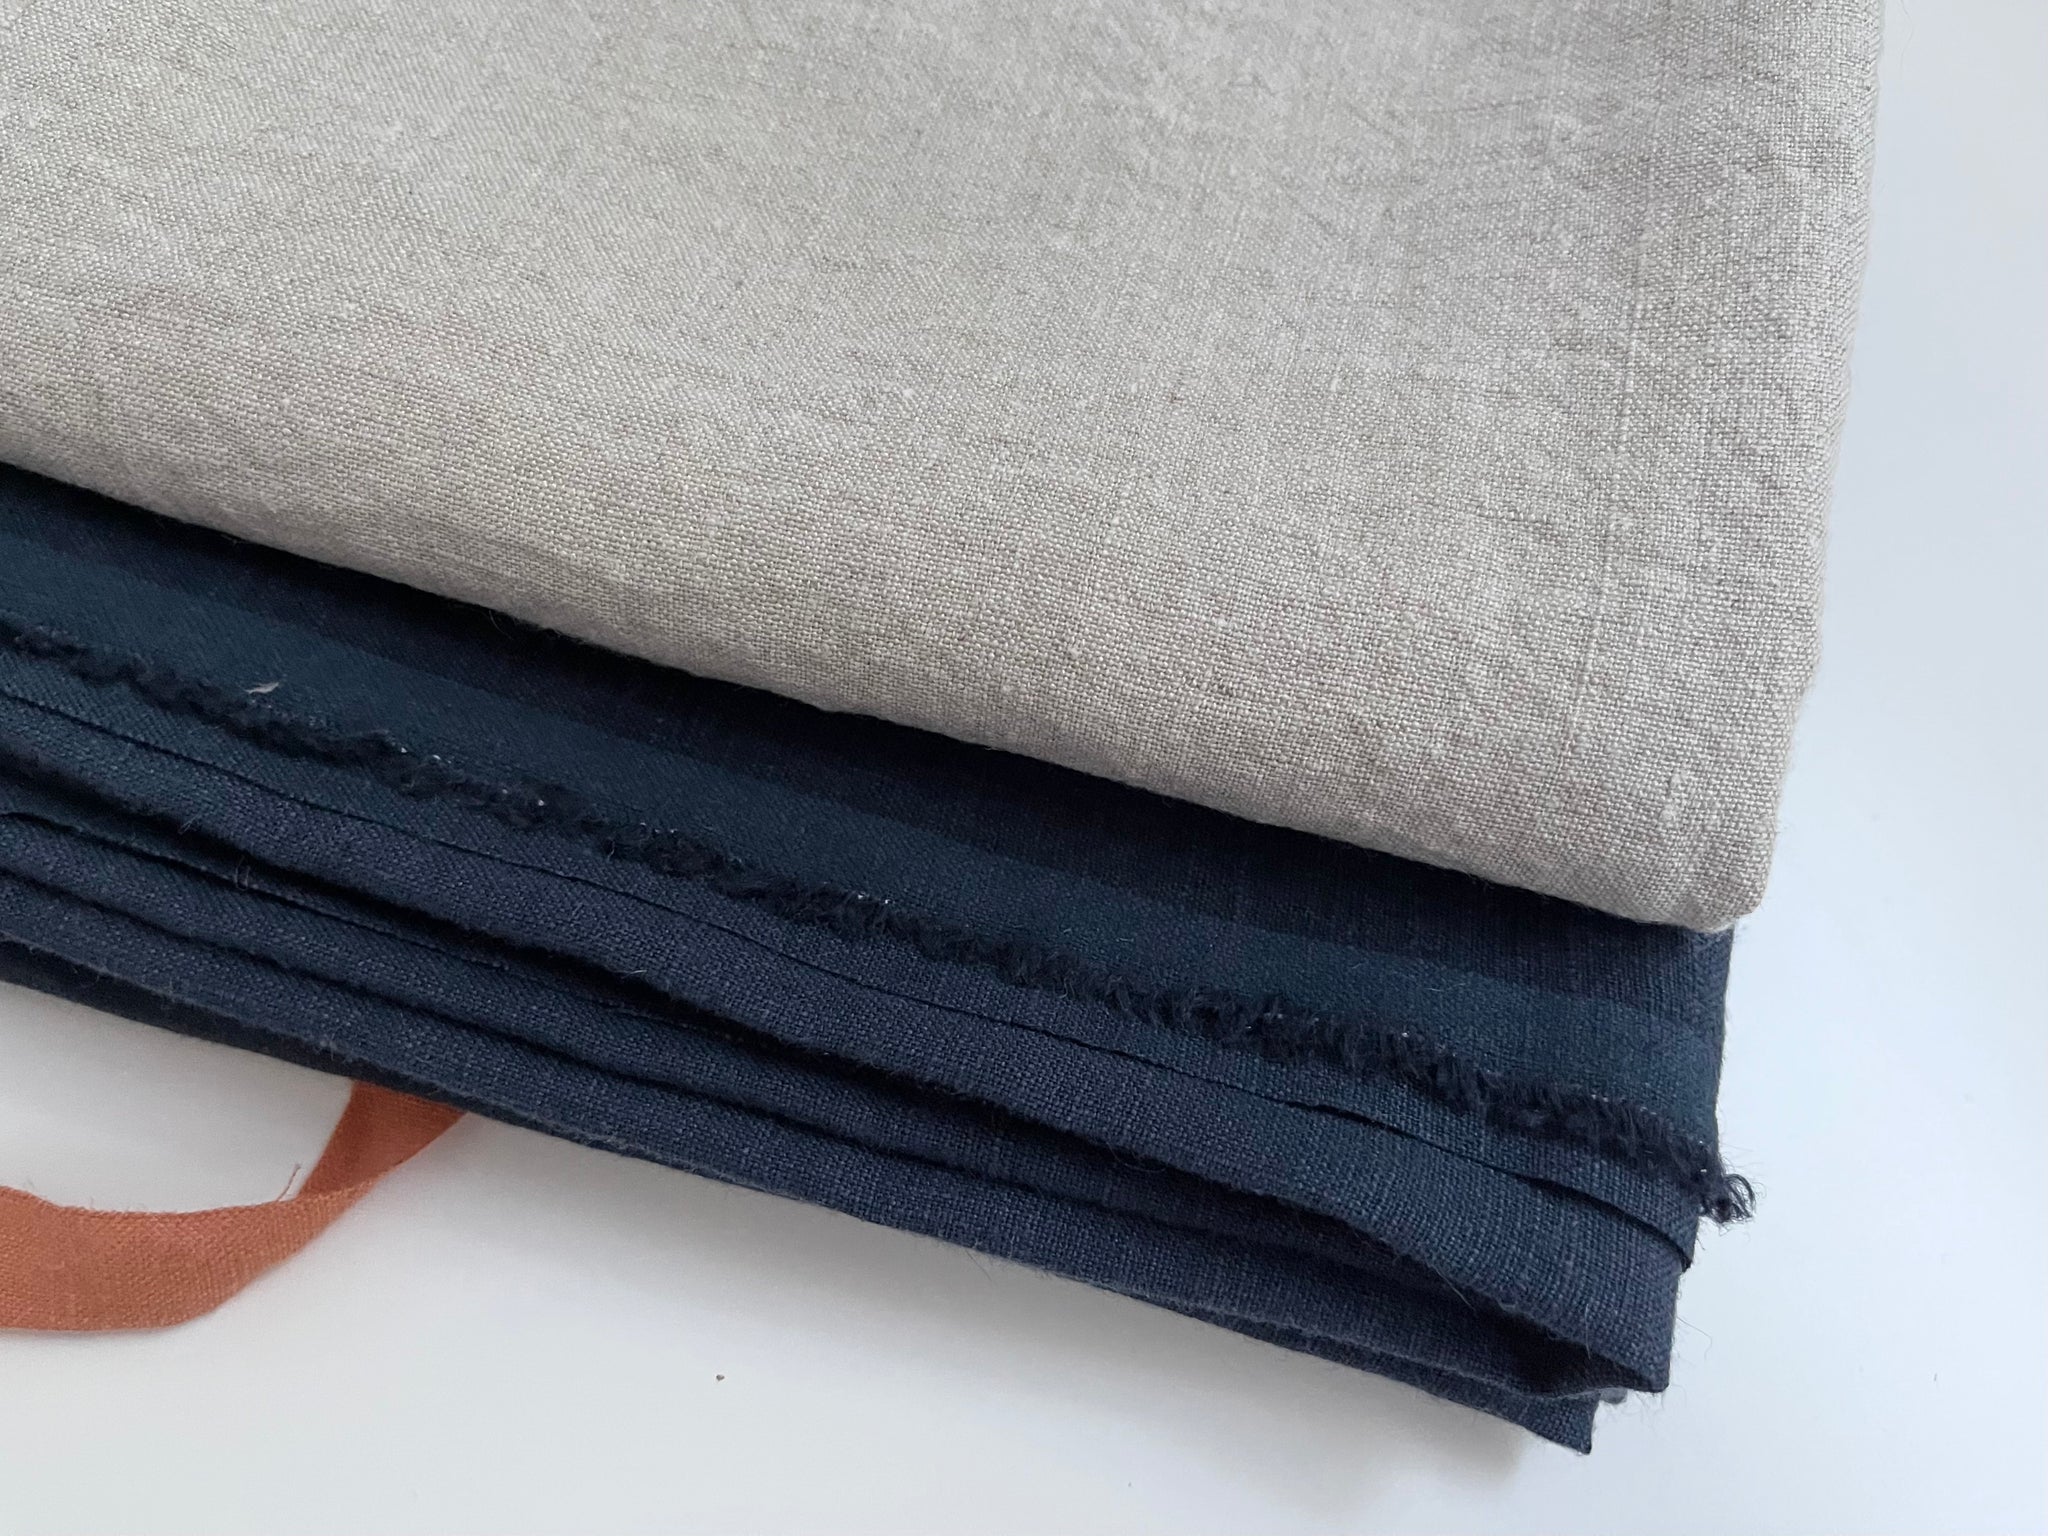 Linen Fabric Remnants - Navy Blue, Natural